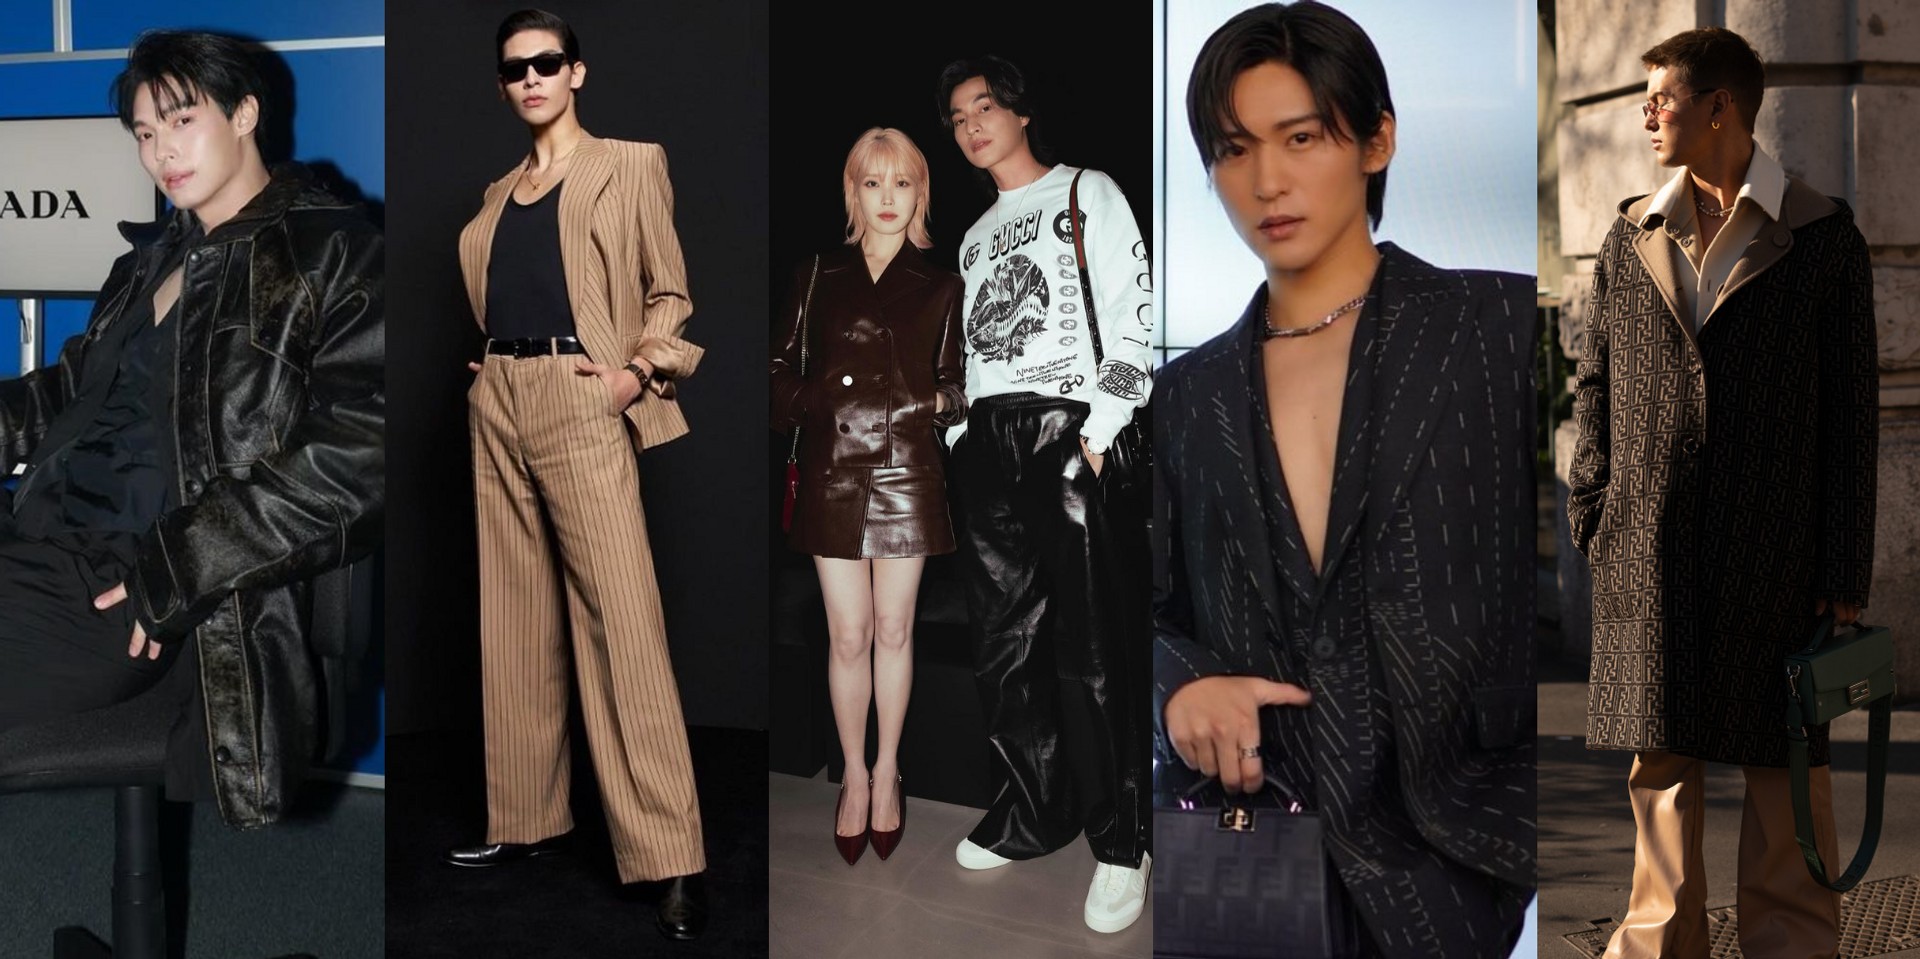 Asian stars take over Milan Fashion Week – IU, Snow Man's Raul and Ren Meguro, Gulf Kanawut, James Reid, Win Metawin, and more